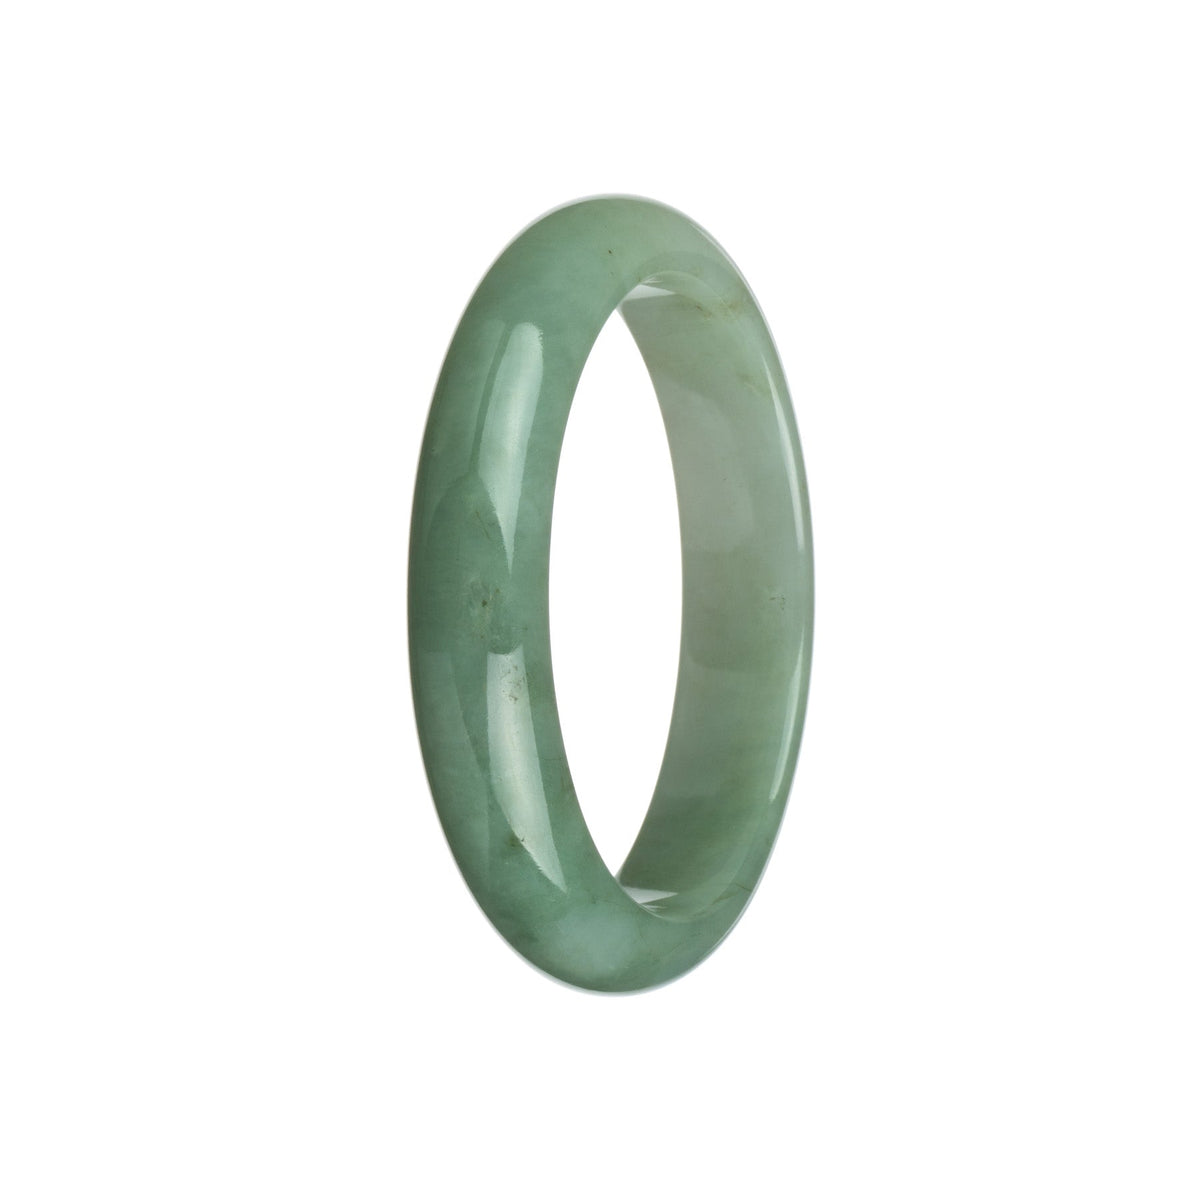 Genuine Grade A Greyish Green and White Traditional Jade Bracelet - 59mm Half Moon